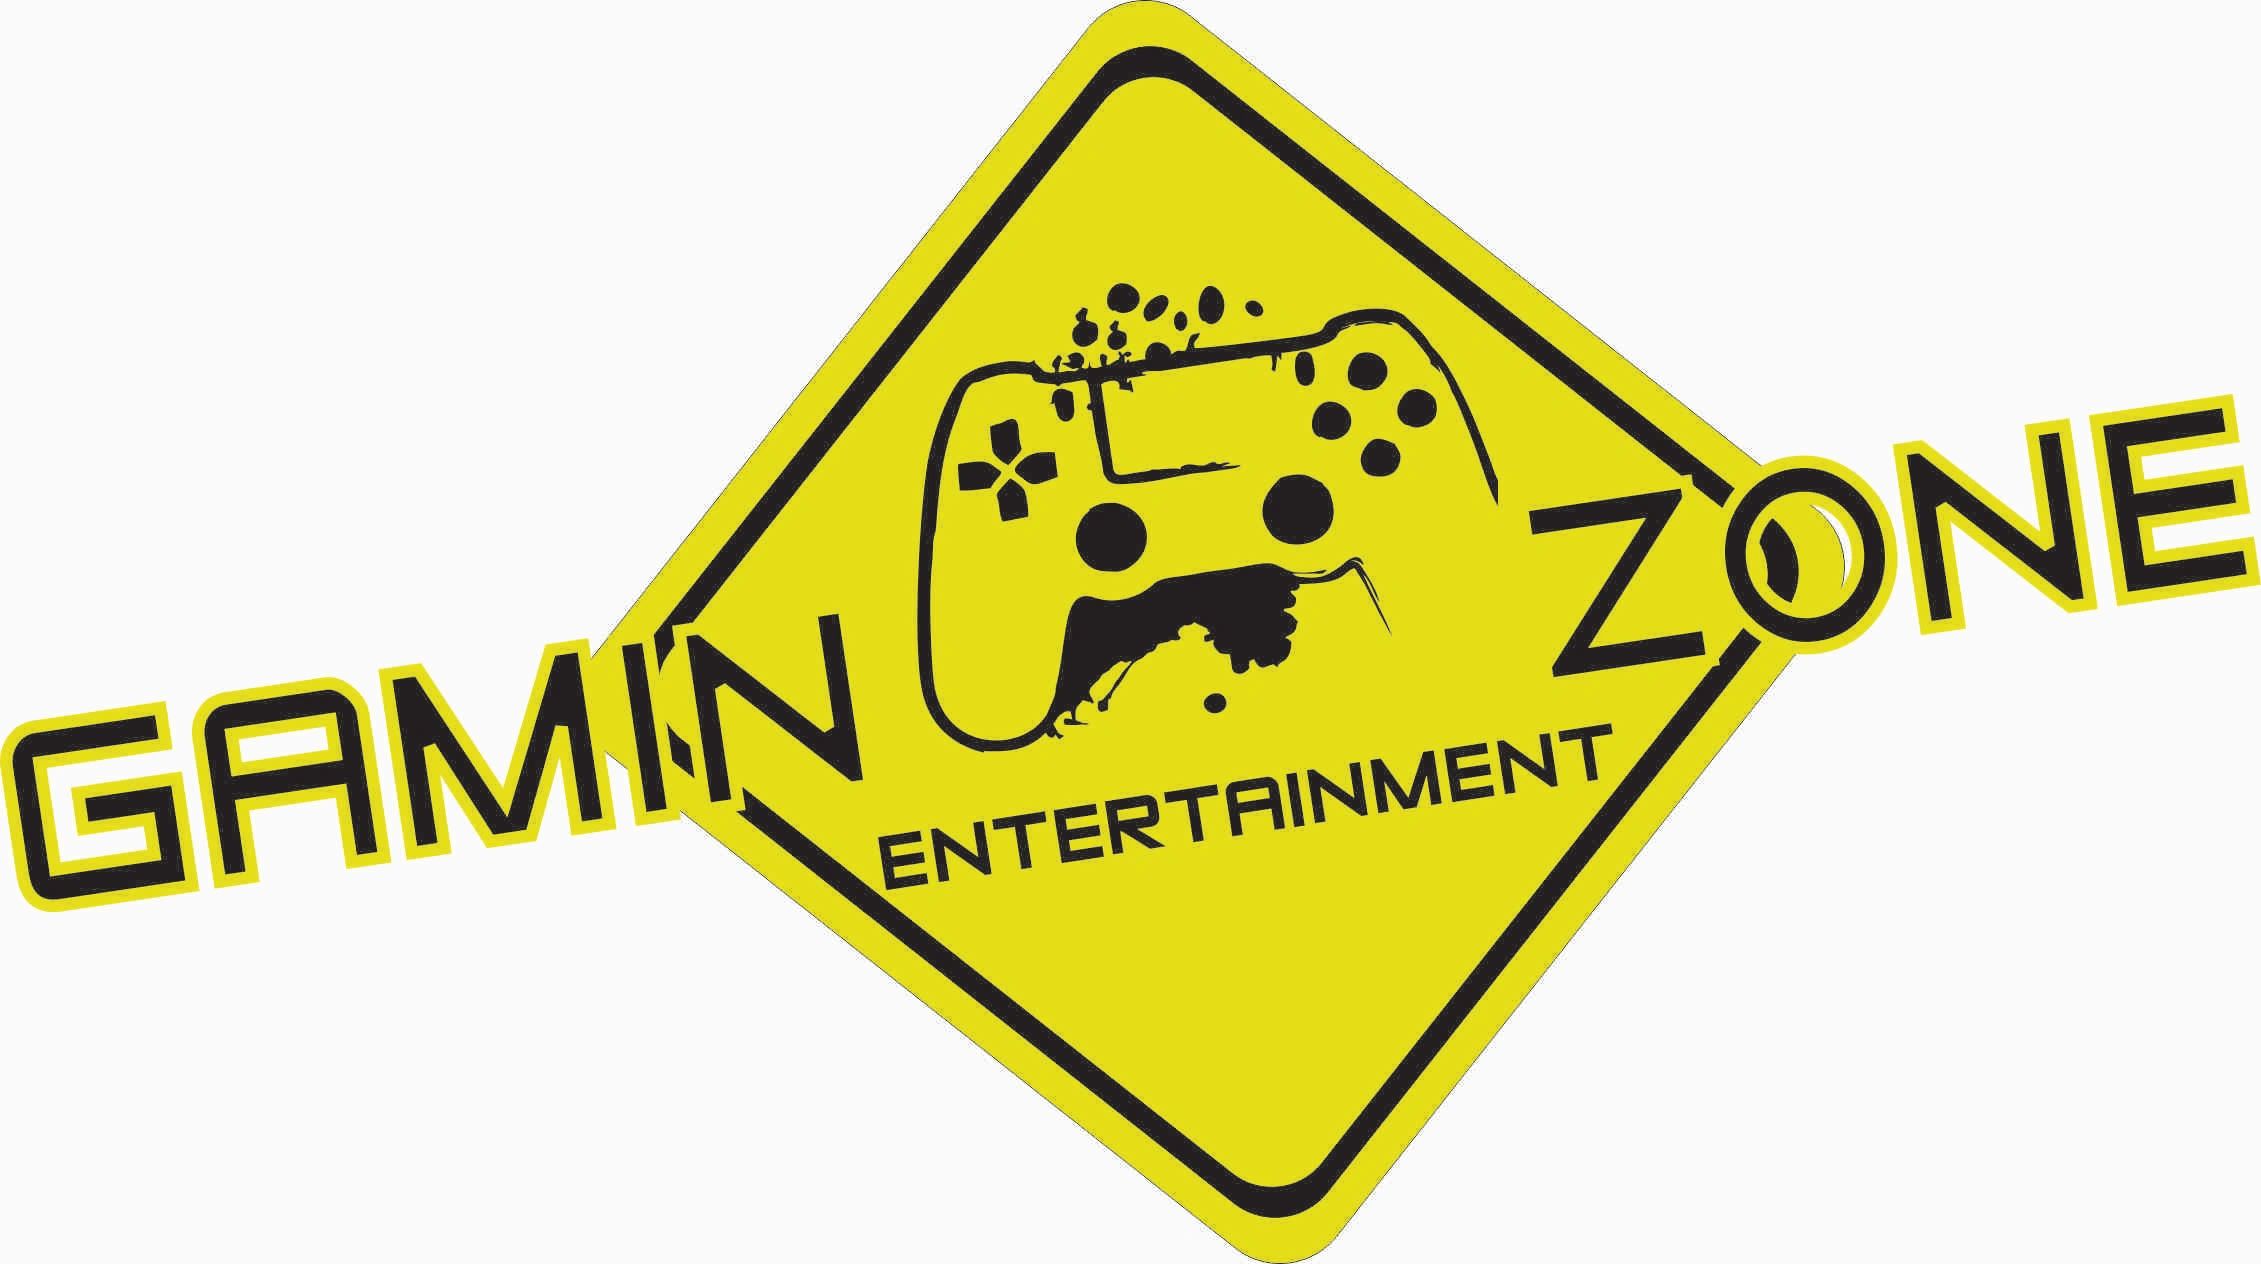 Gaming Zone Adventure - Gaming Jobs Online ✔️Number #1 Gaming